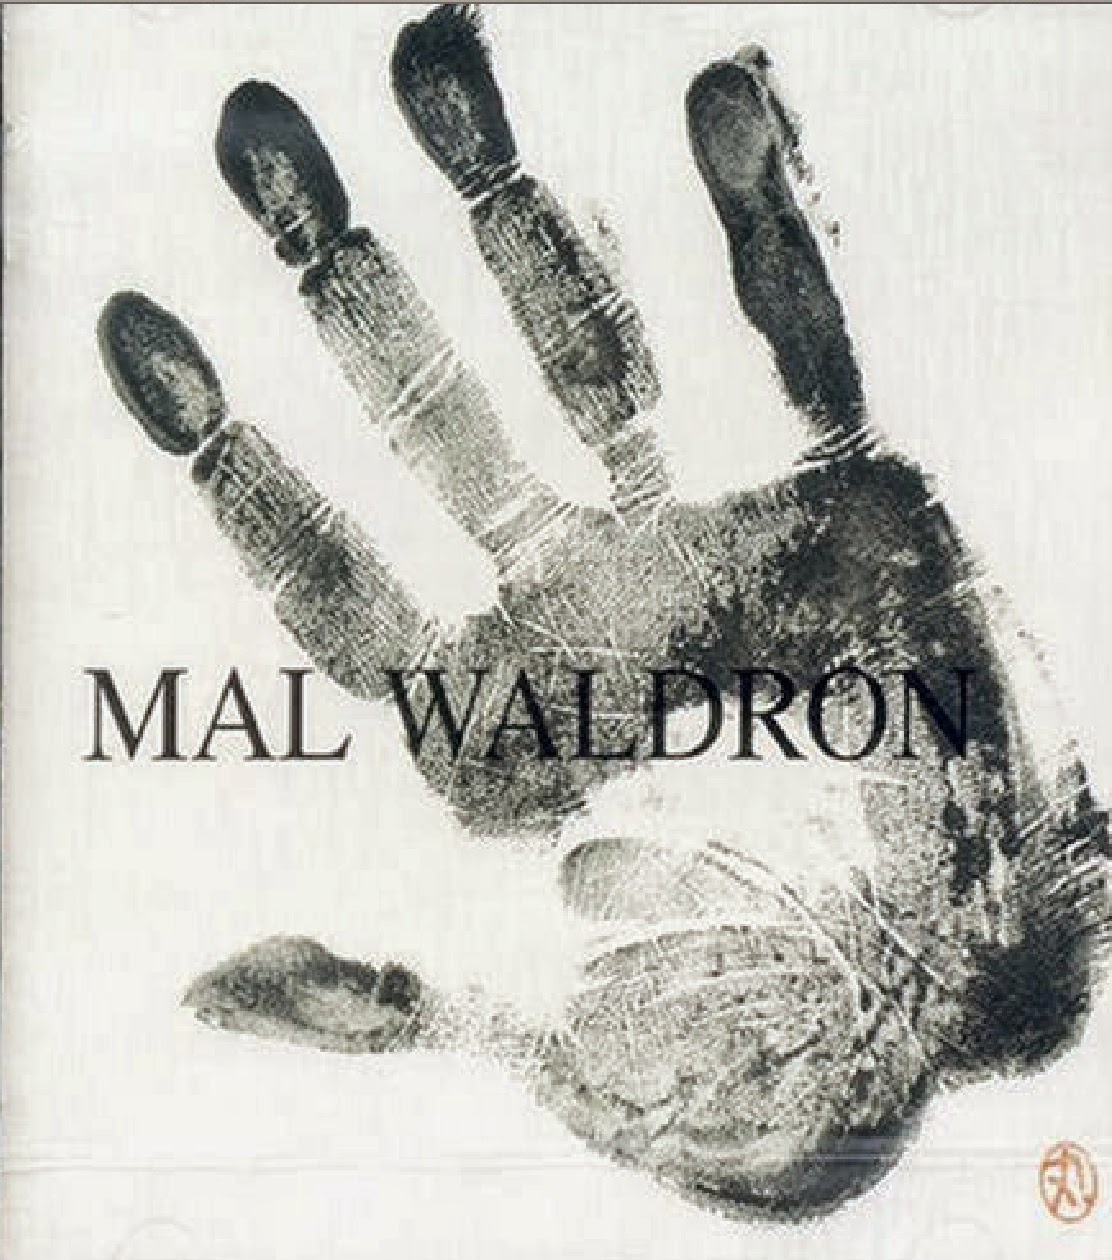 MAL WALDRON - Mal Waldron cover 